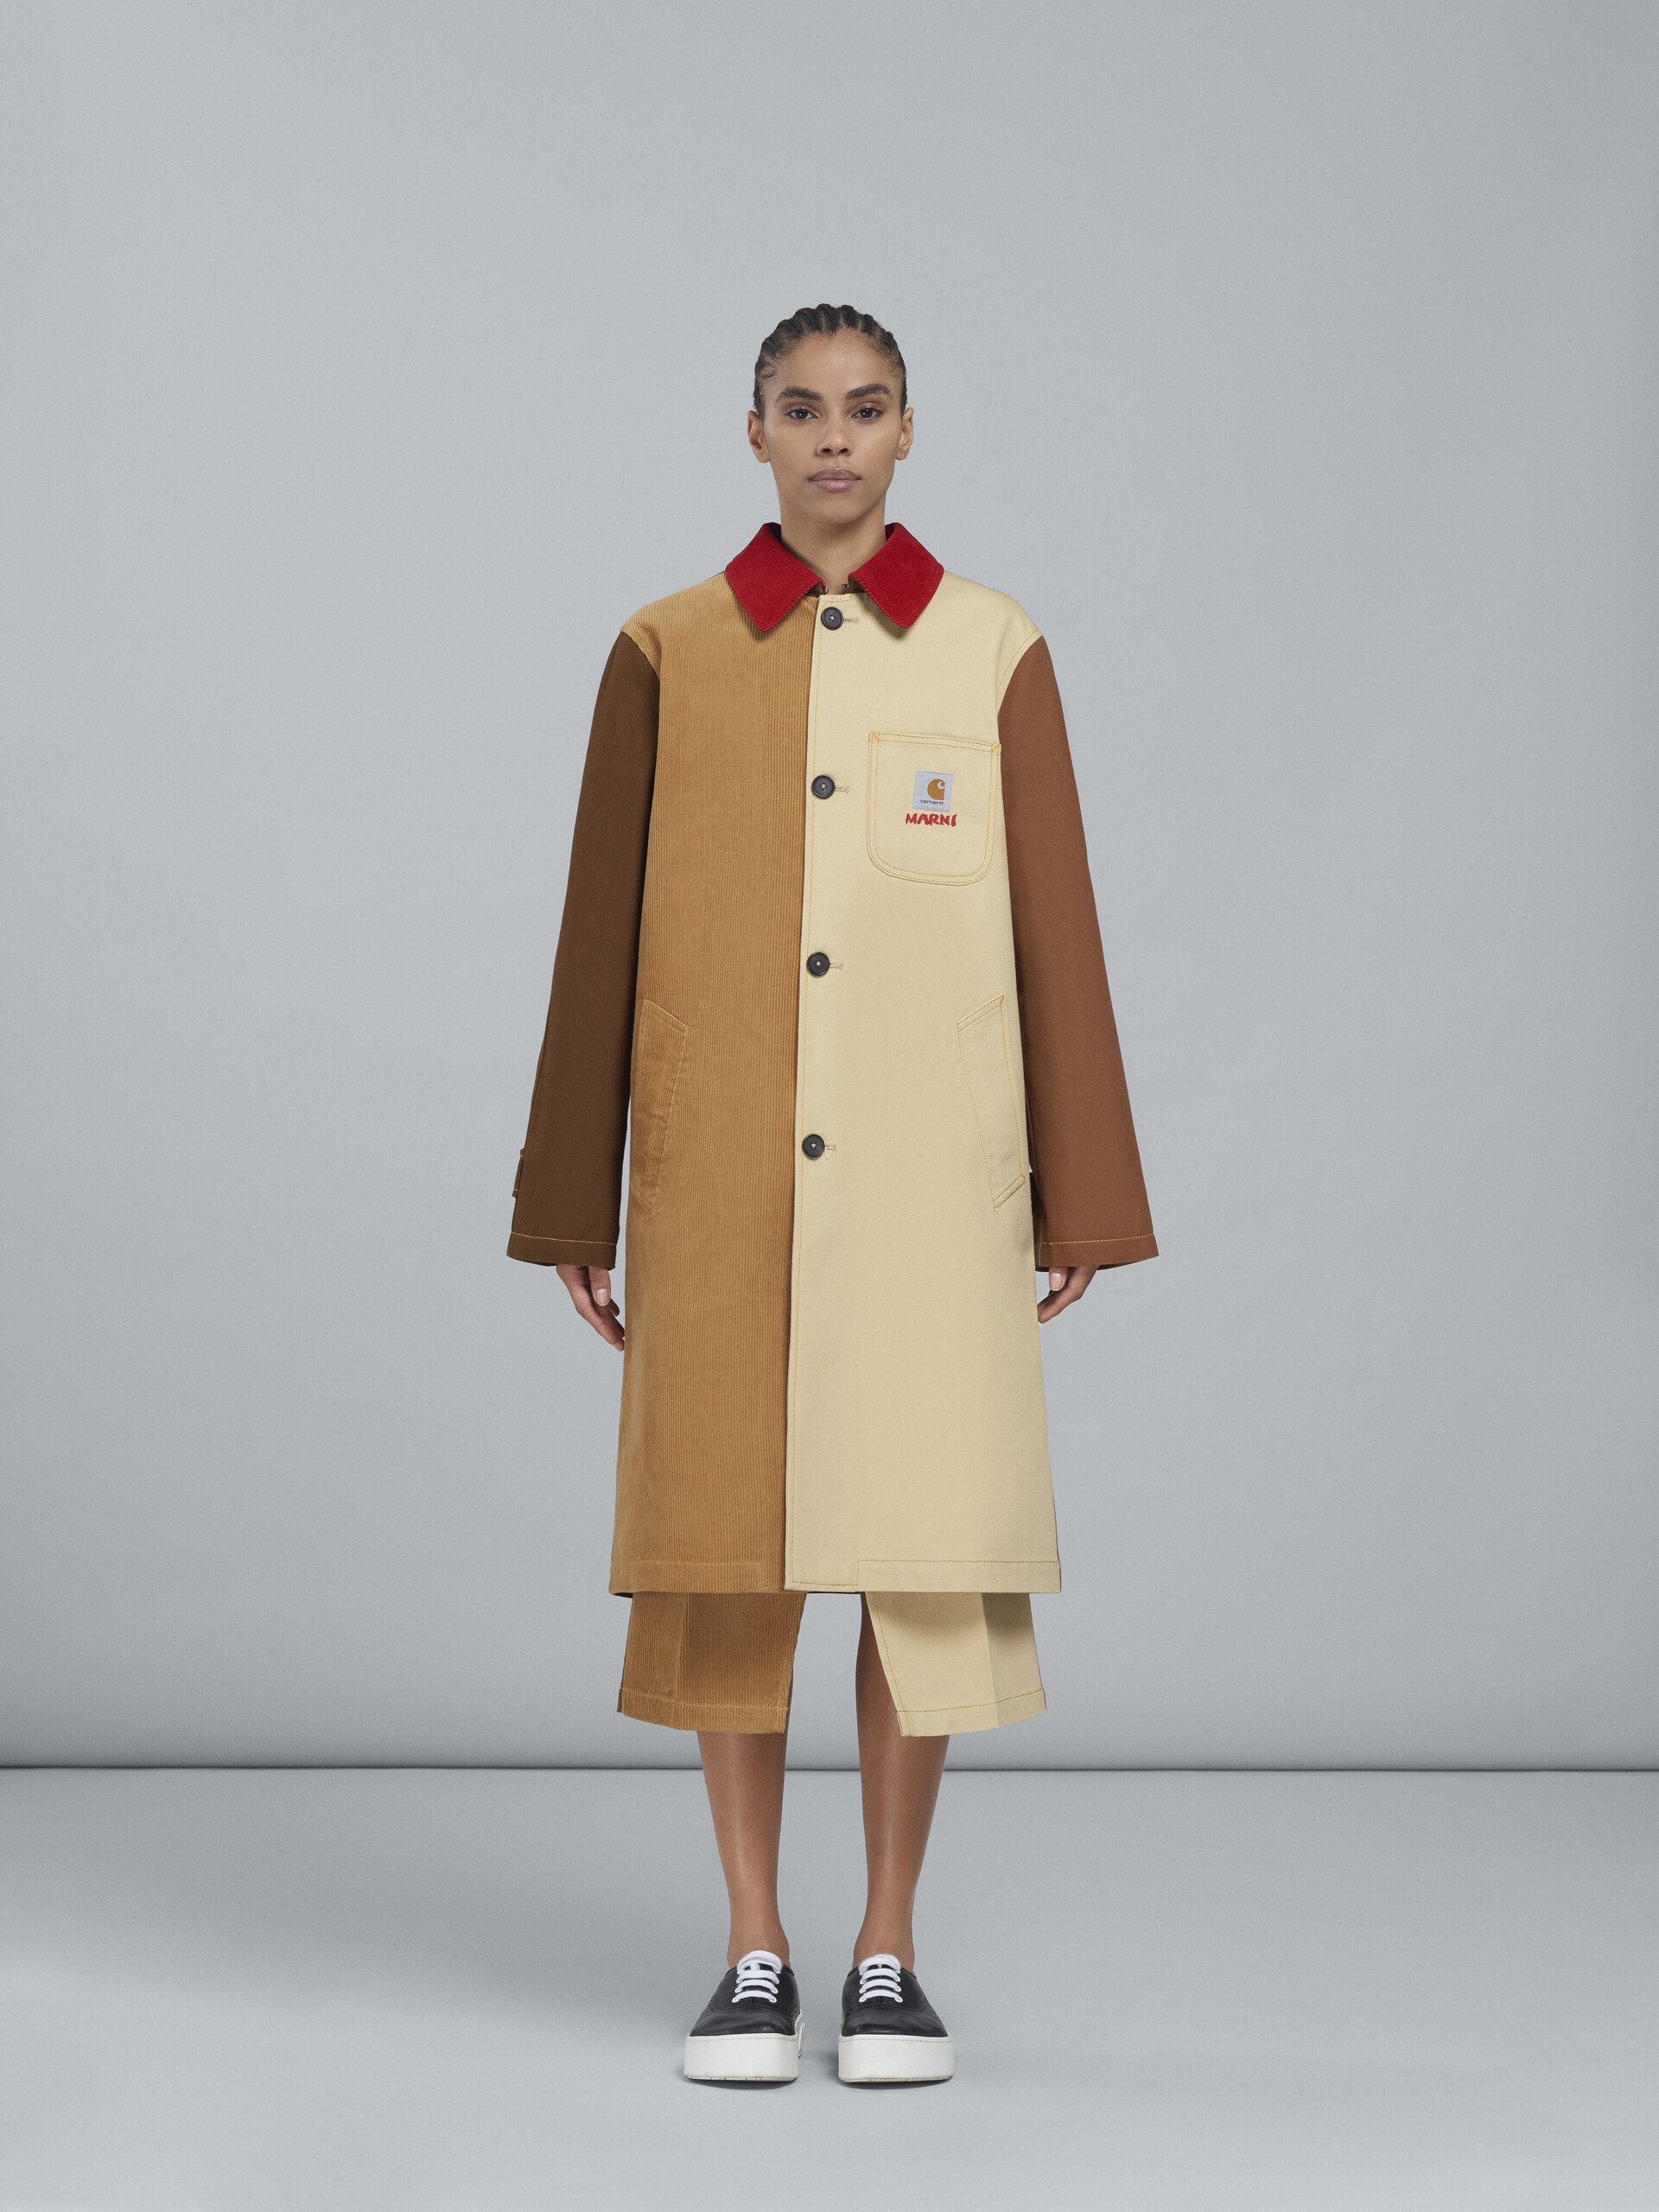 MARNI x CARHARTT WIP - brown colour-block coat - Coat - Image 2